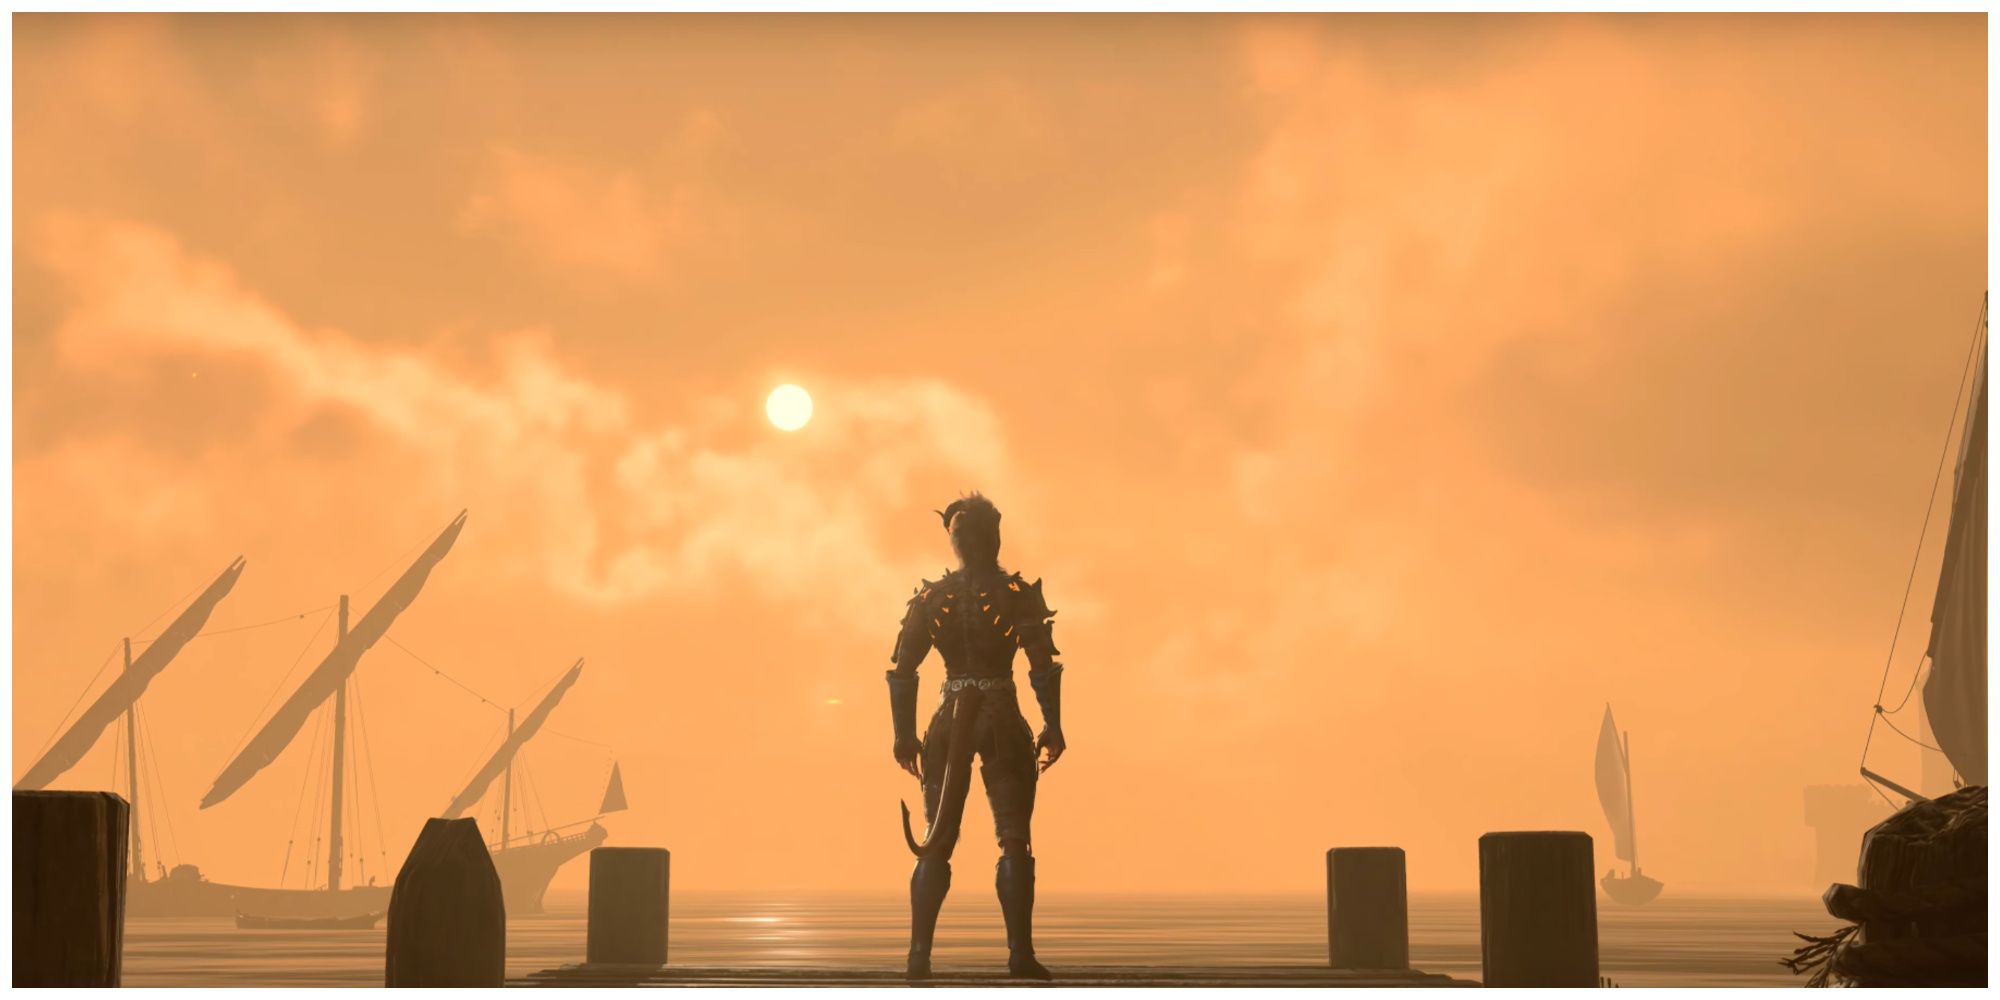 Baldur's Gate 3, Karlach Standing On Docks At Sunset